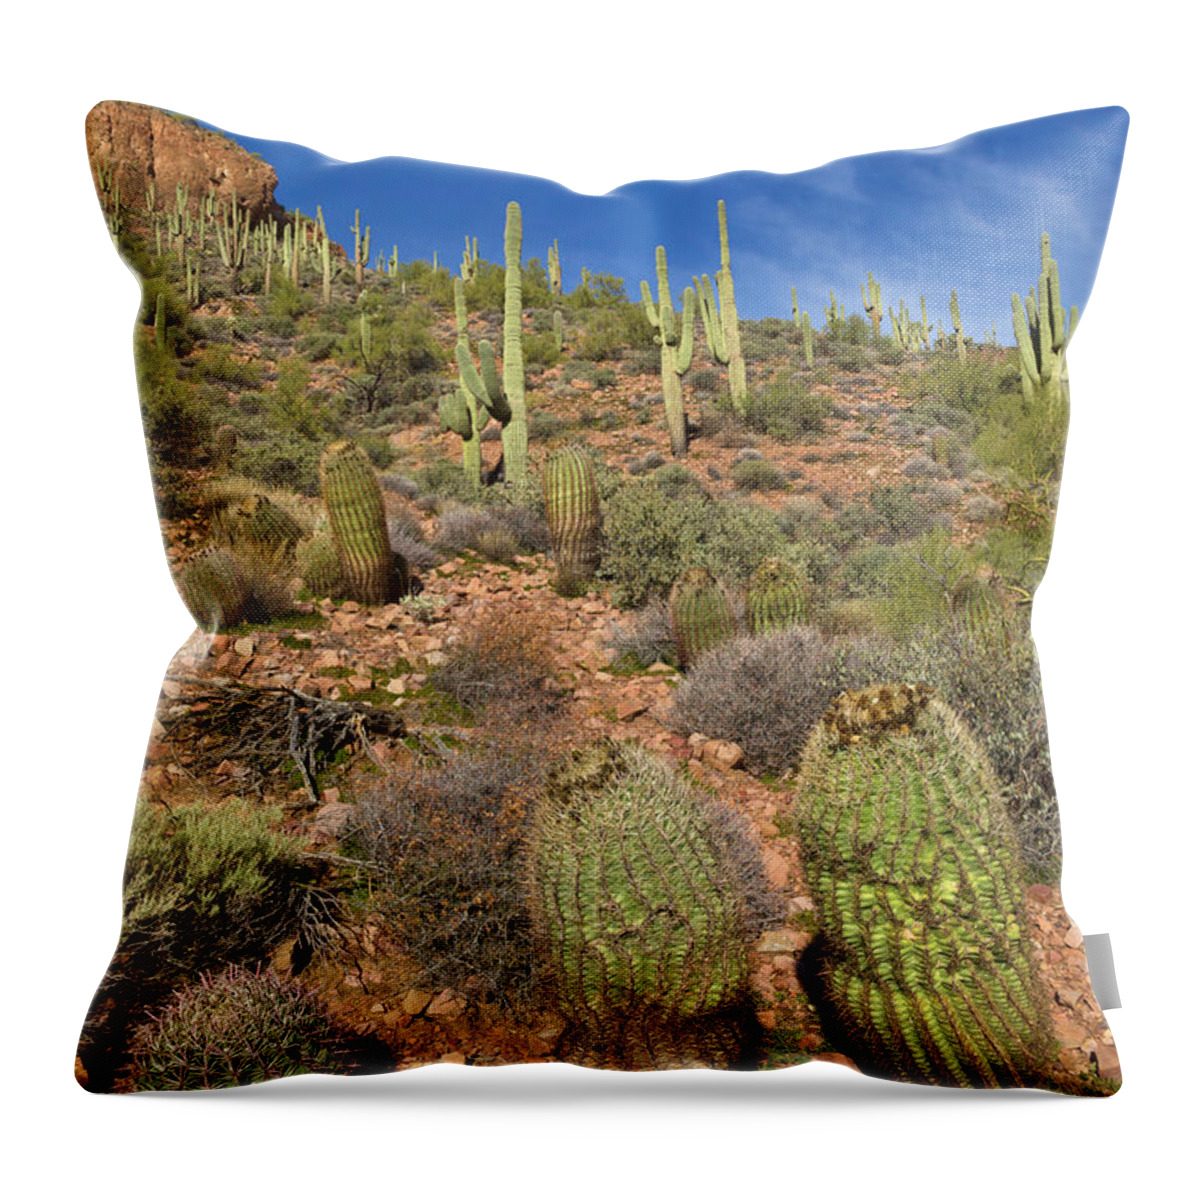 00559179 Throw Pillow featuring the photograph Saguaro And Barrel Cacti Tonto N M by Yva Momatiuk John Eastcott